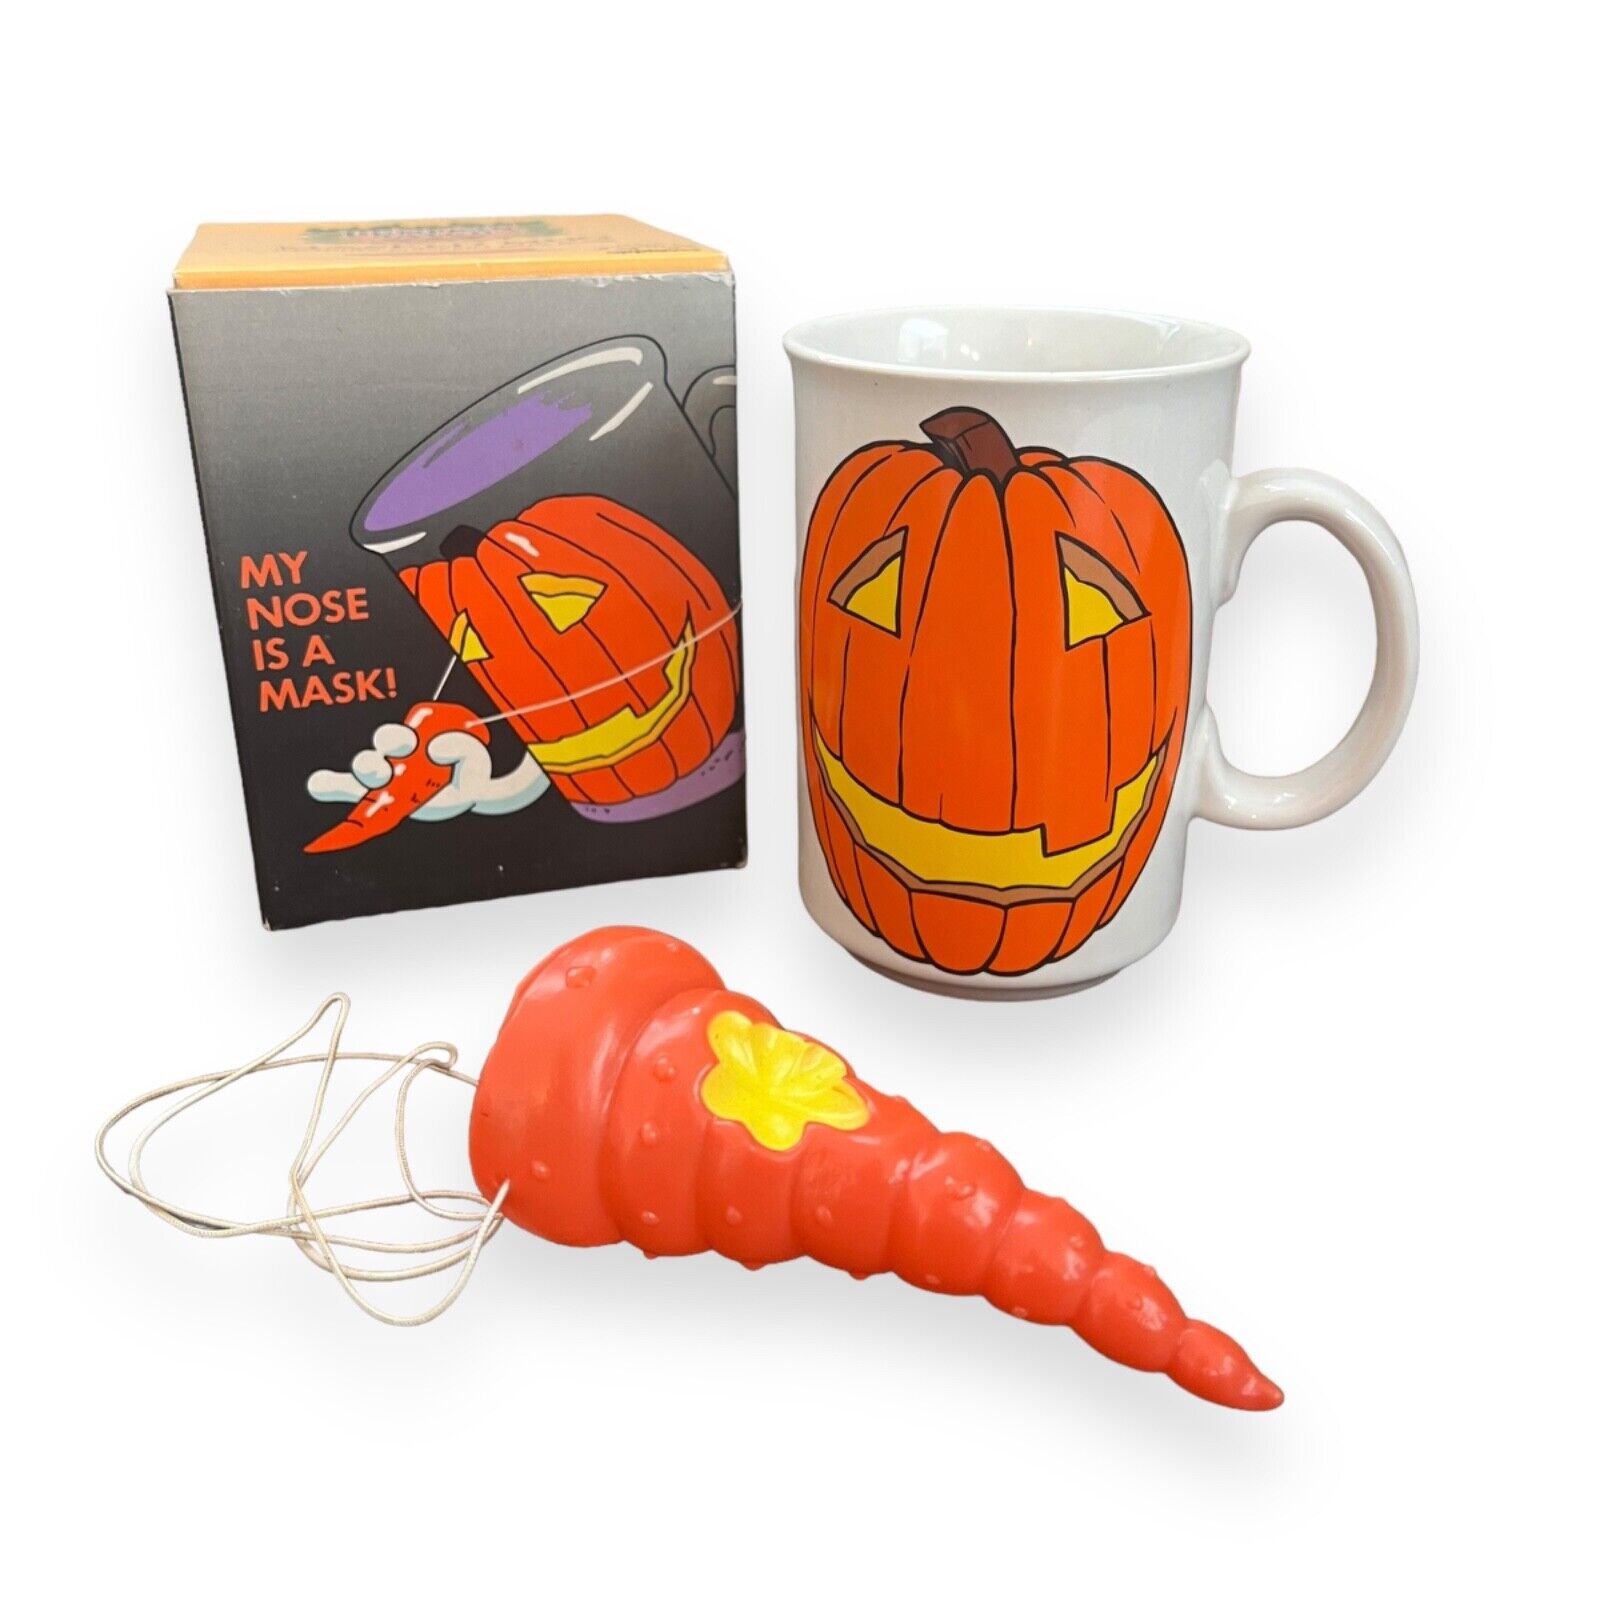 Vintage NOS Applause Halloween Coffee Mug Pumpkin Jack-o-lantern Masked Mug Box